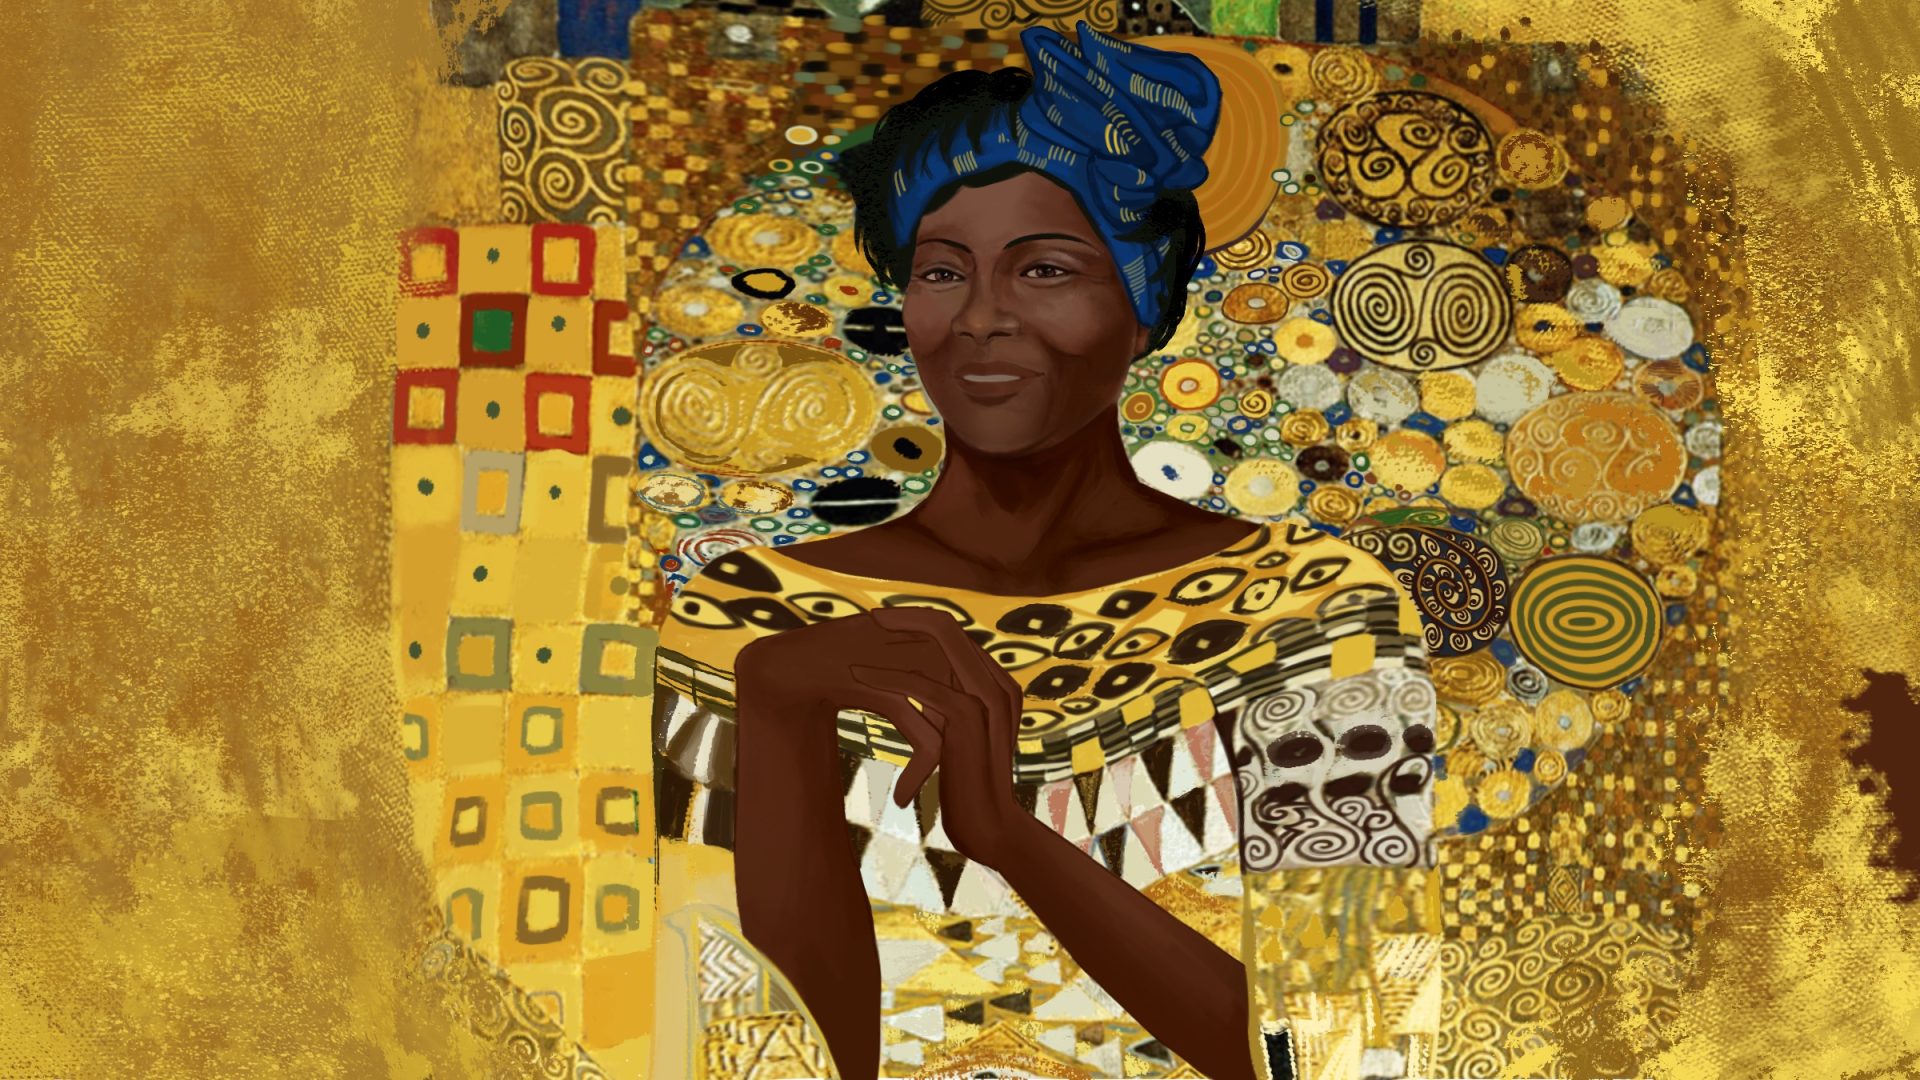 Portrait of Wangari Maathia in the style of Austrian painter Gustav Klimt’s “Adele Bloch-Bauer I.”